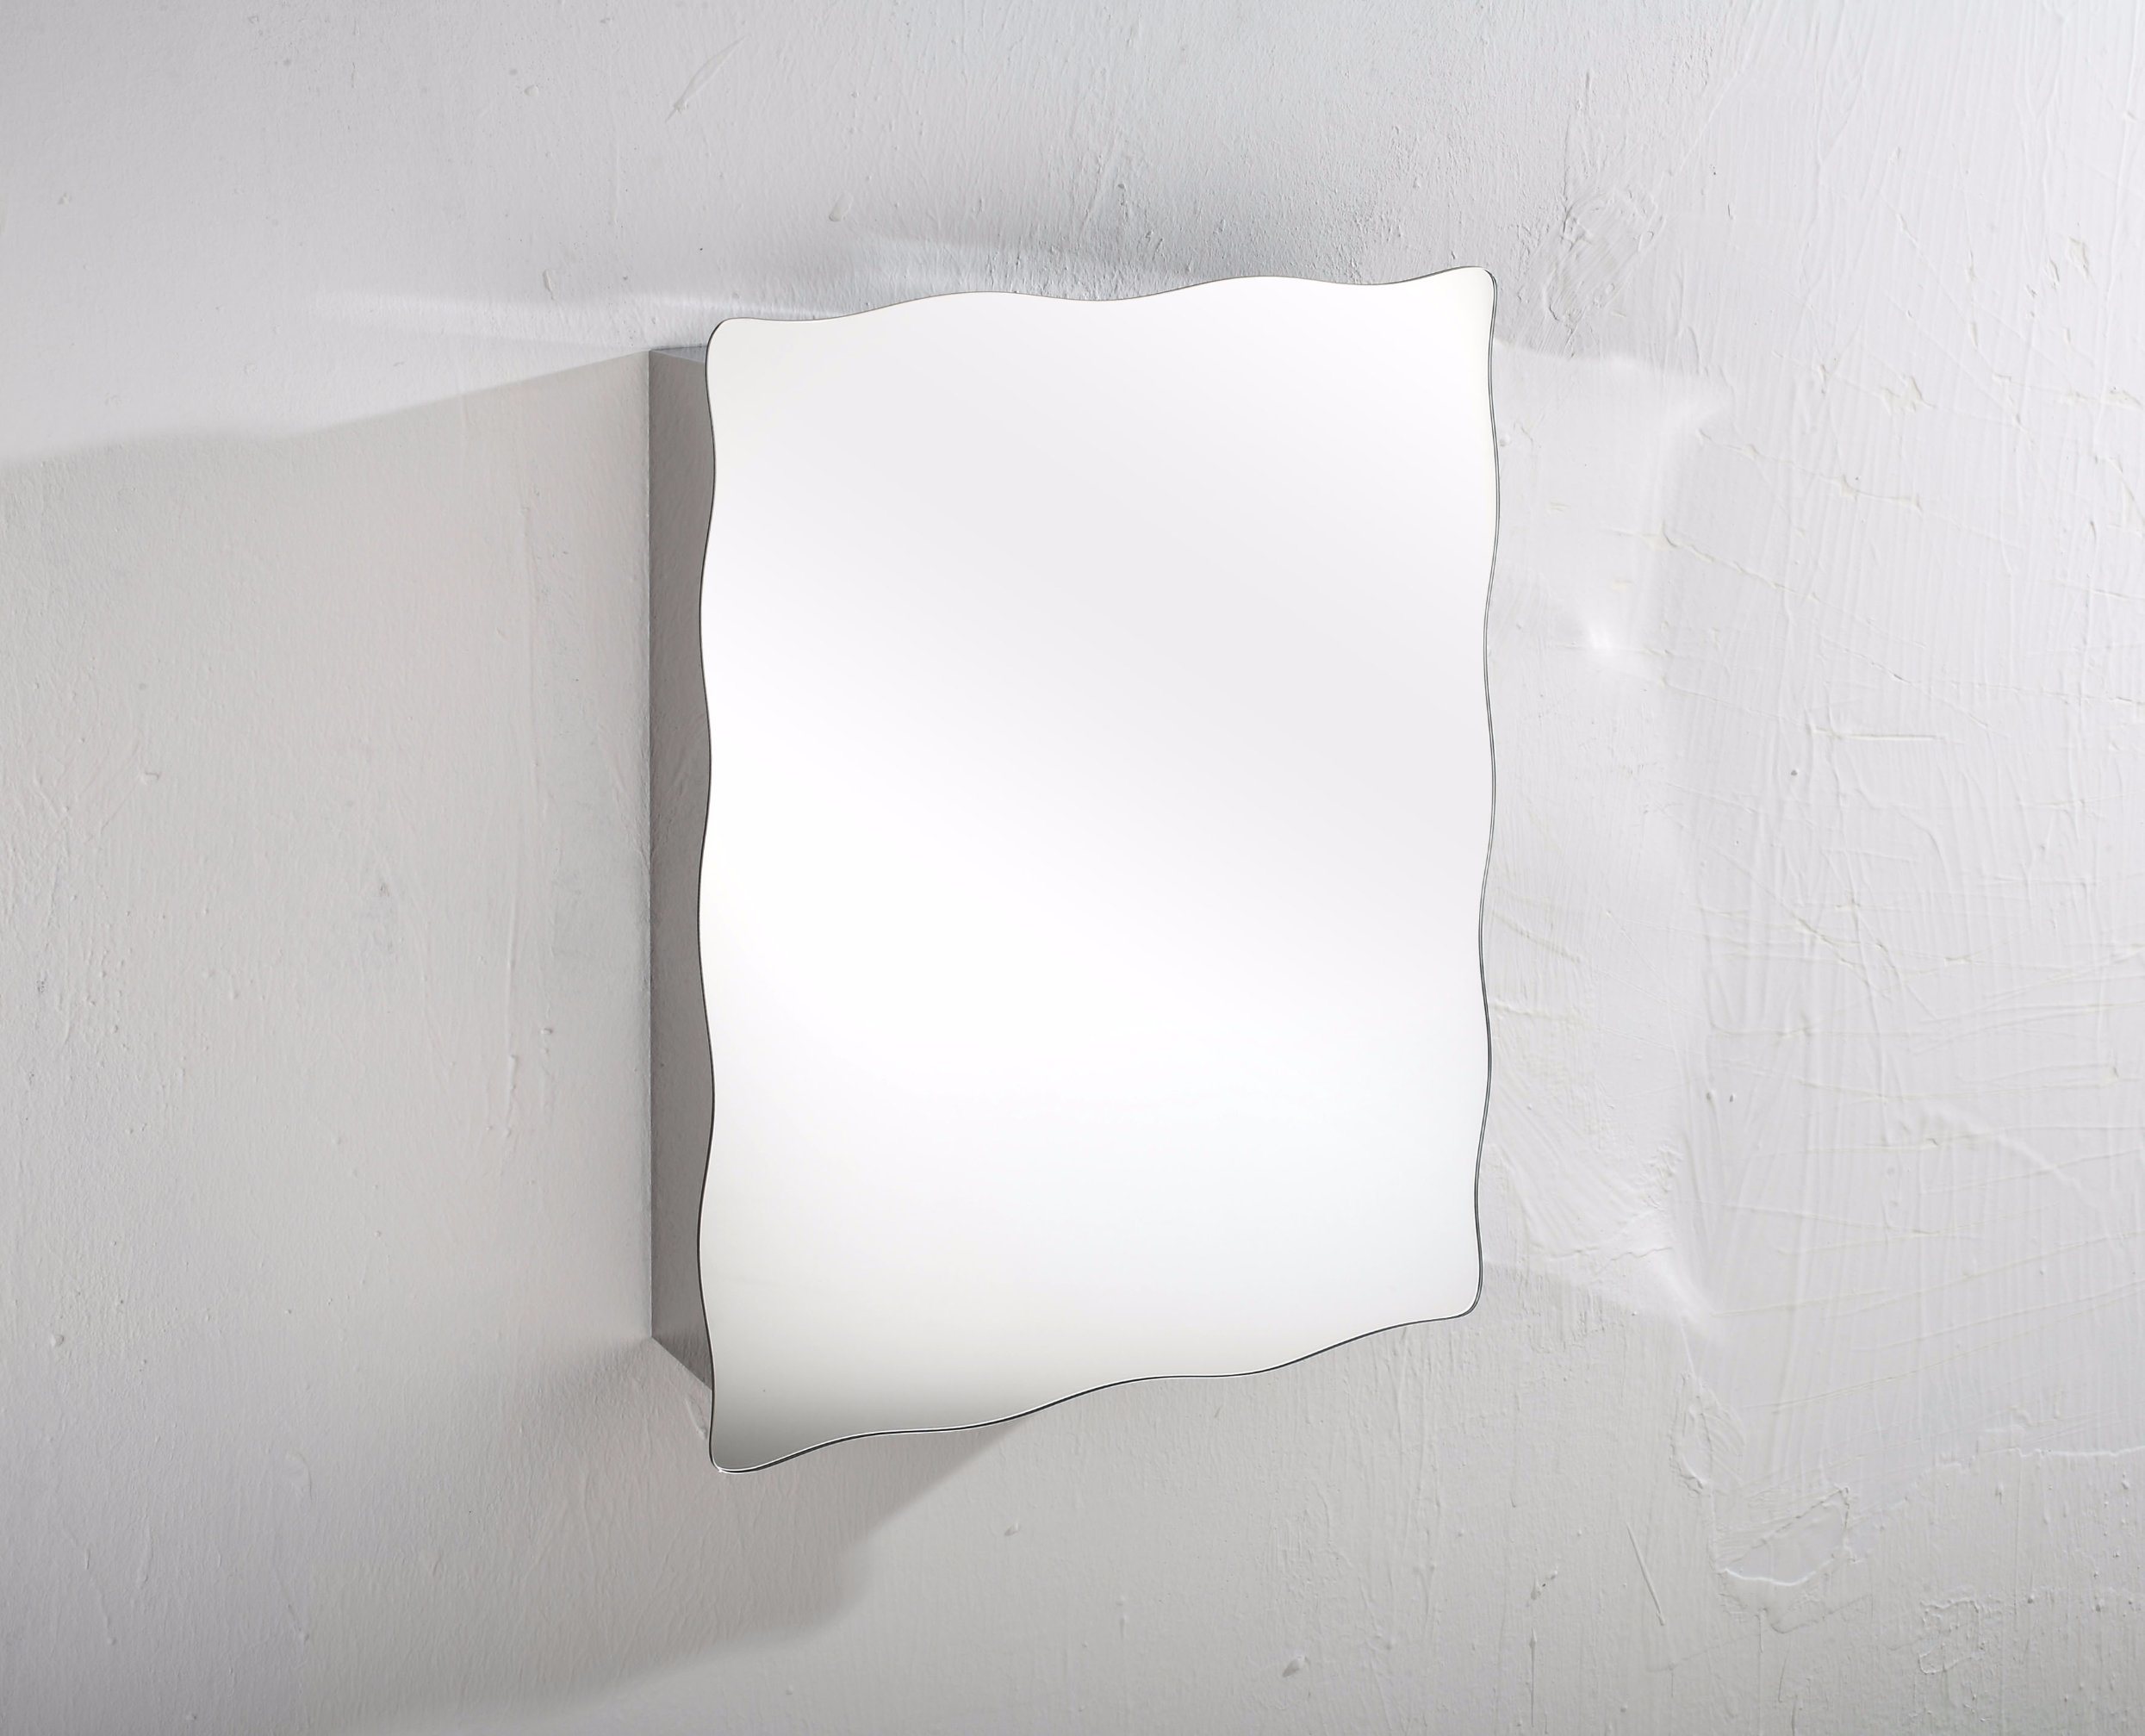 Stainless Steel Bathroom Mirror Cabinets Modern Single Door Storage Unit